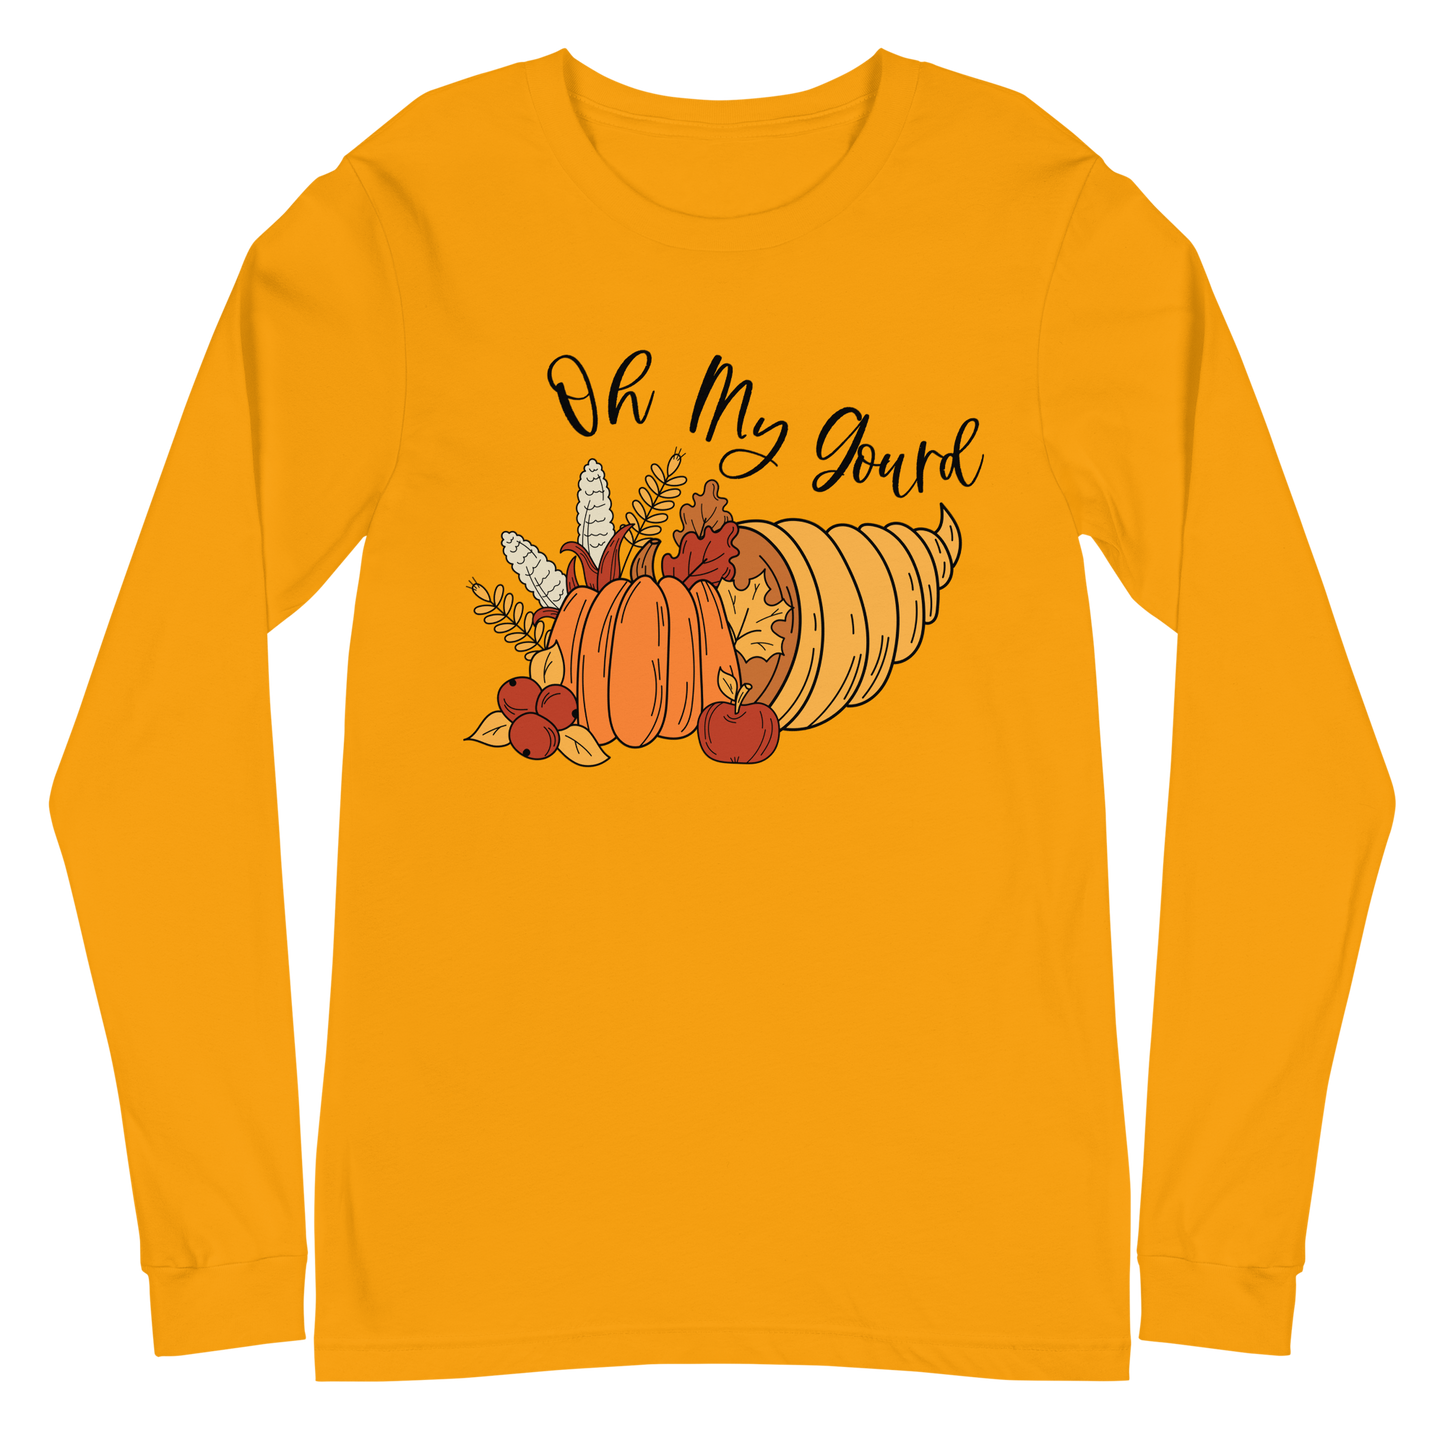 Adult GU 'Oh My Gourd' Long Sleeve T-Shirt